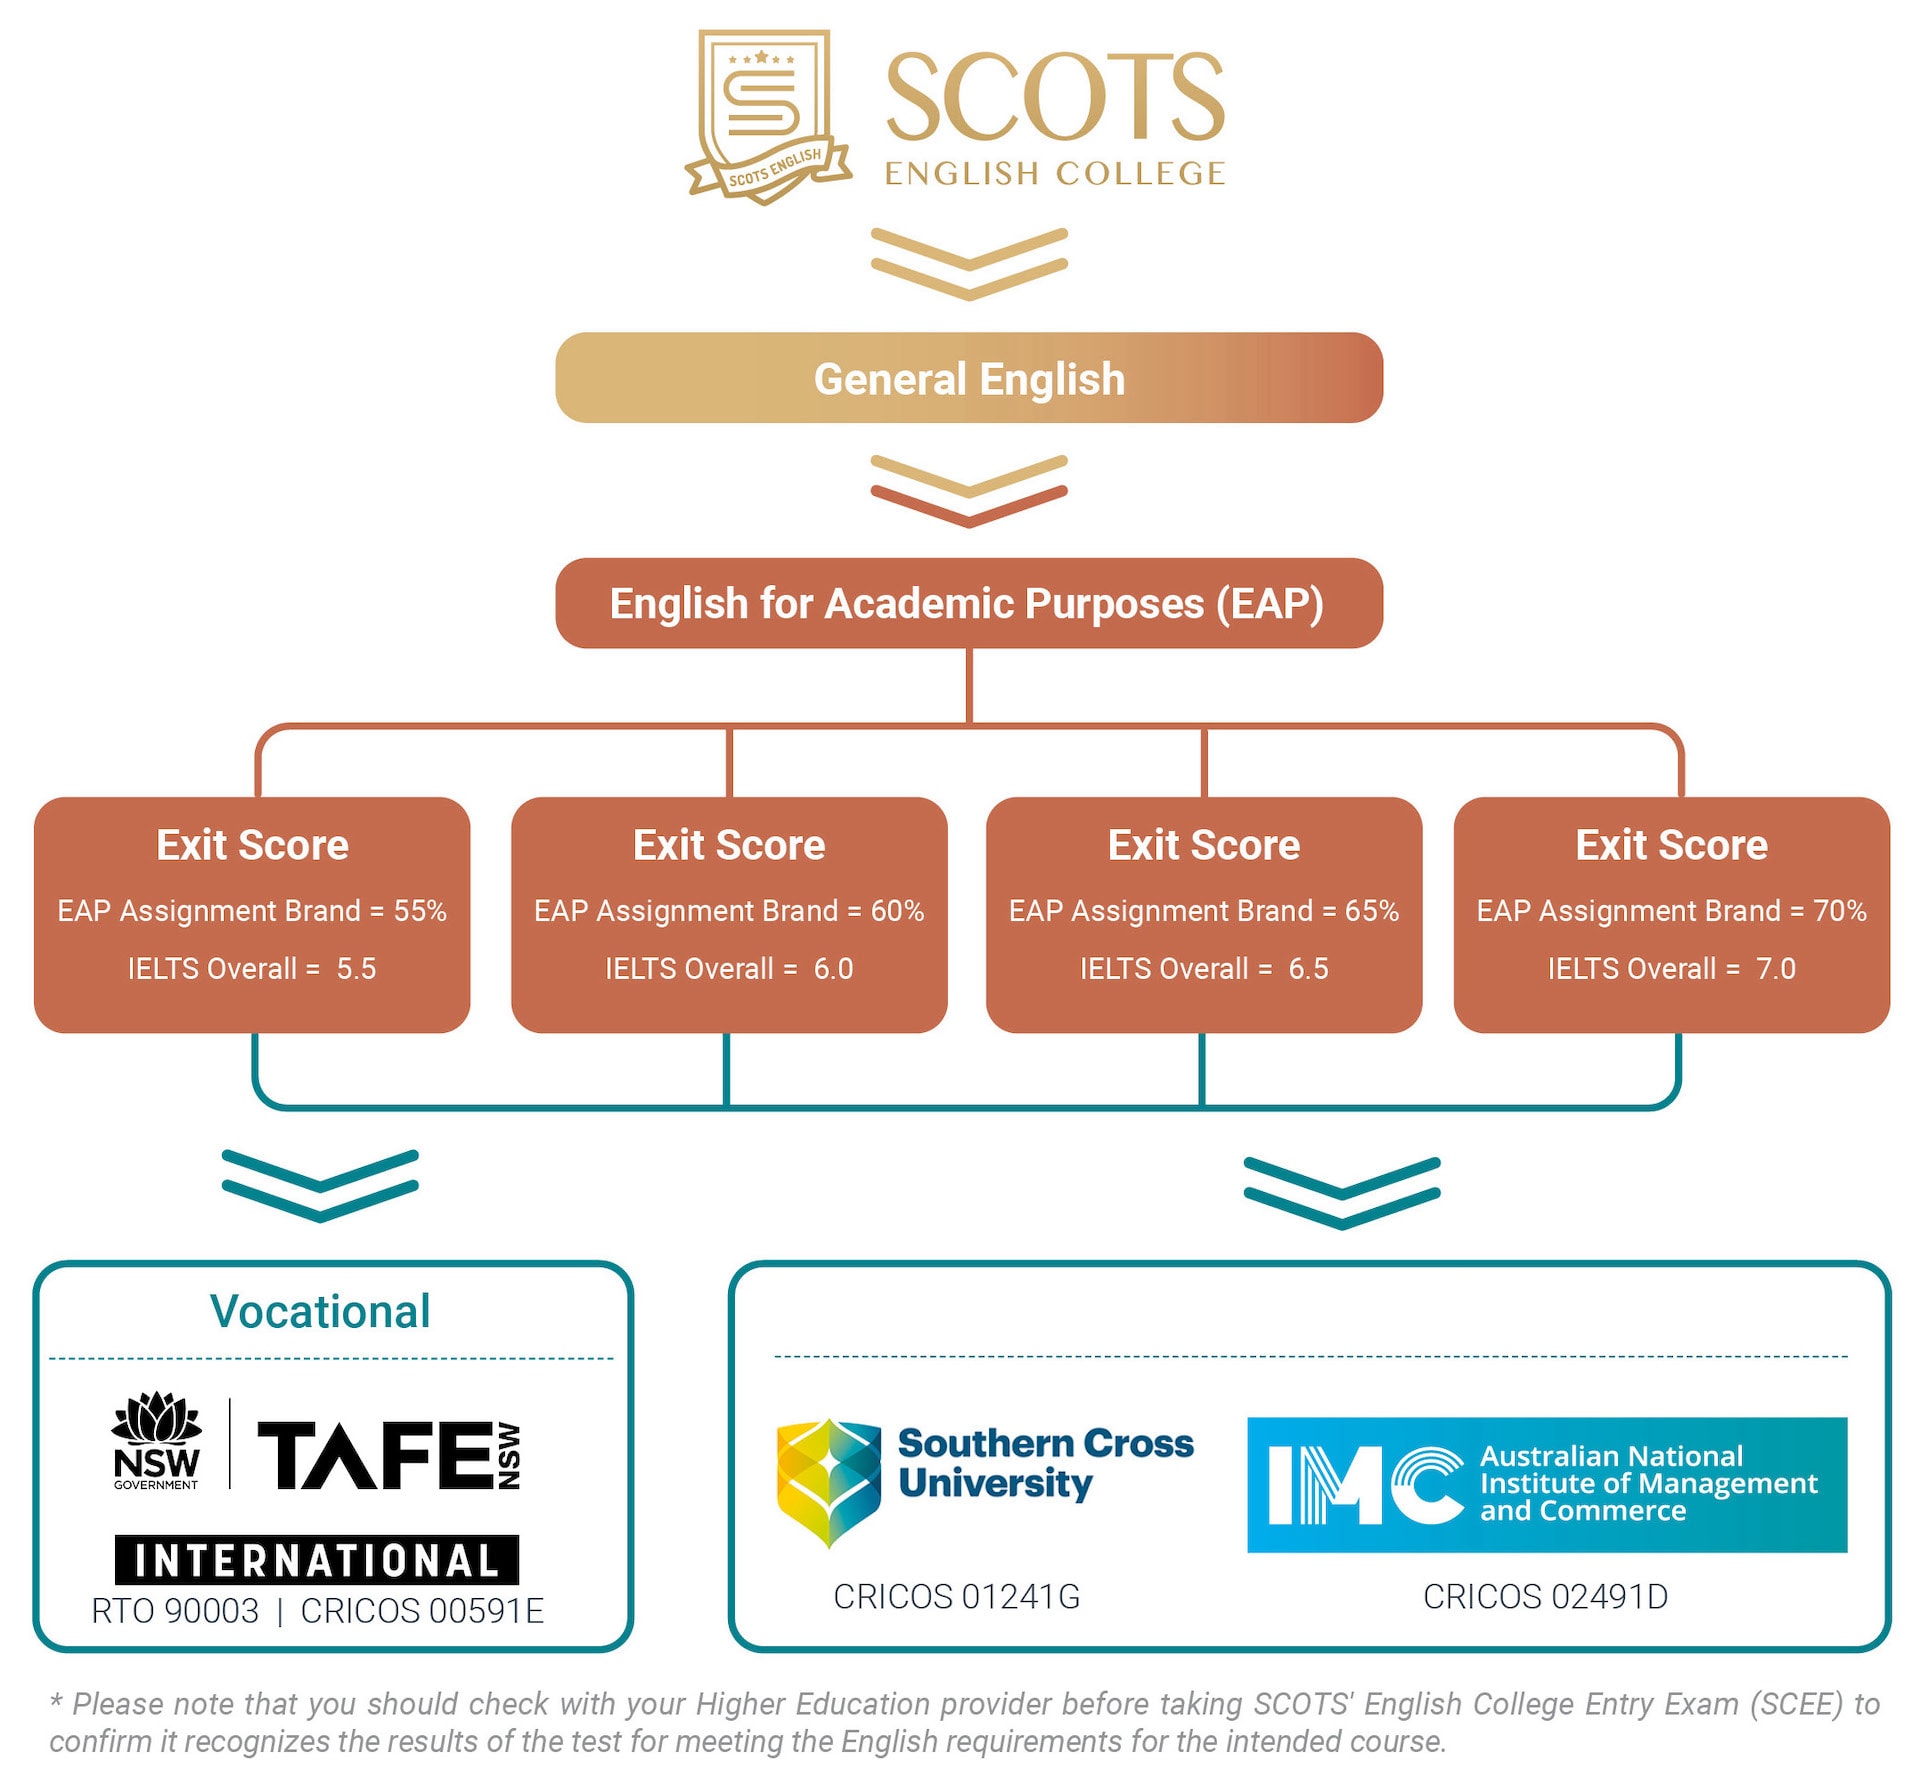 Scots English College Pathways